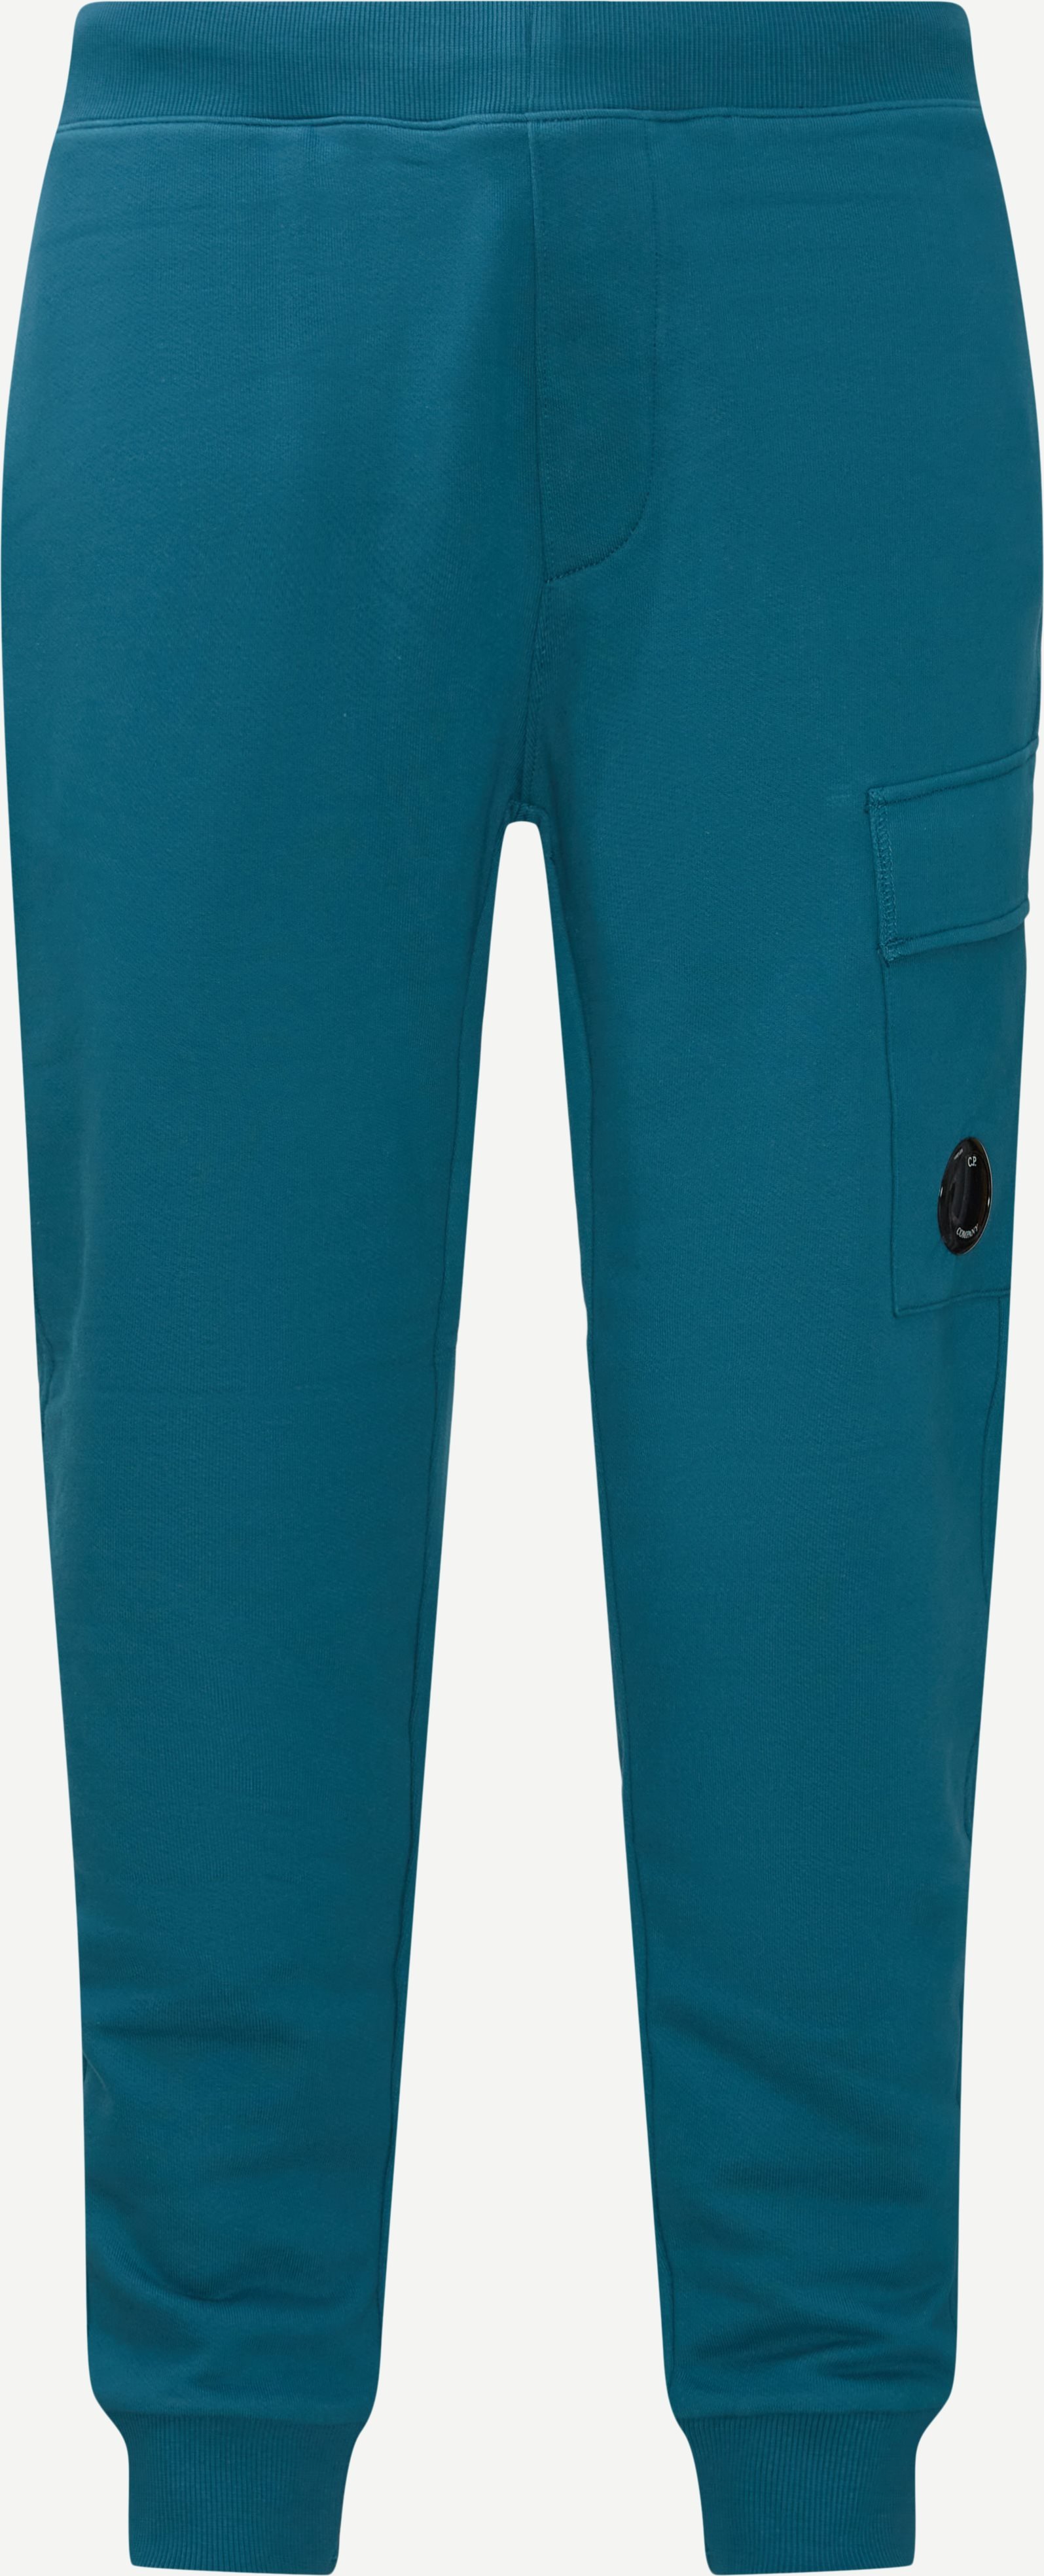 Trousers - Regular fit - Blue